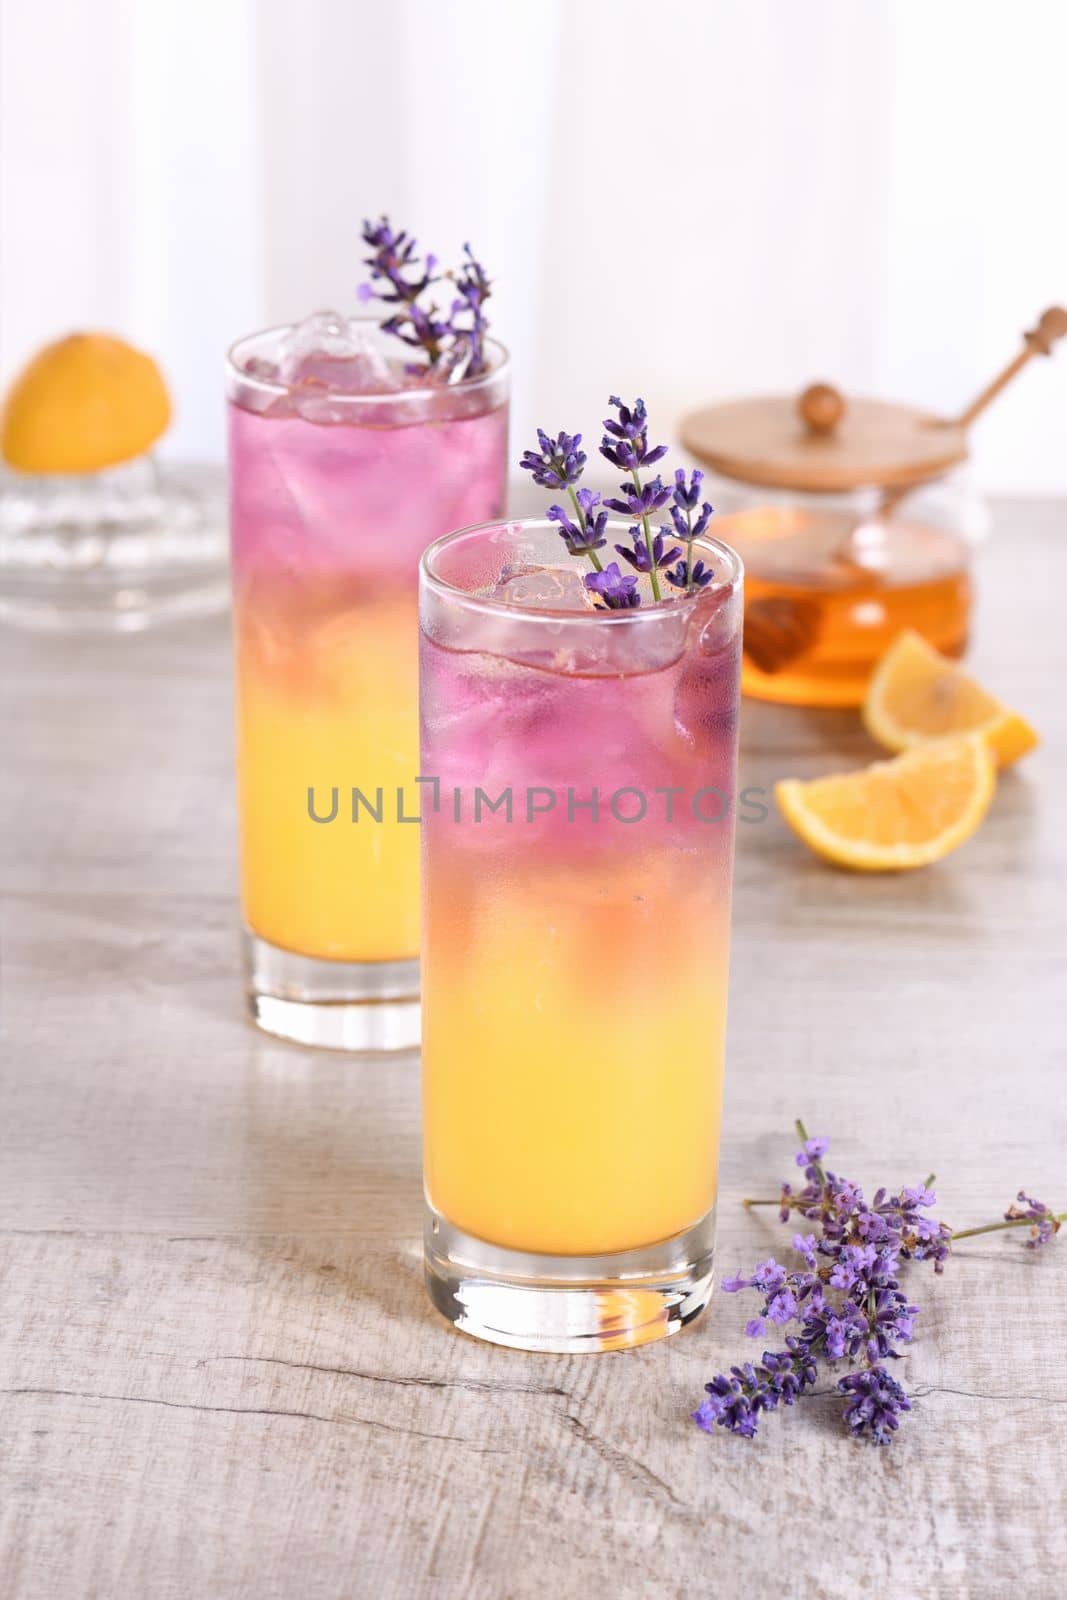 Limoncello liqueur cocktail by Apolonia